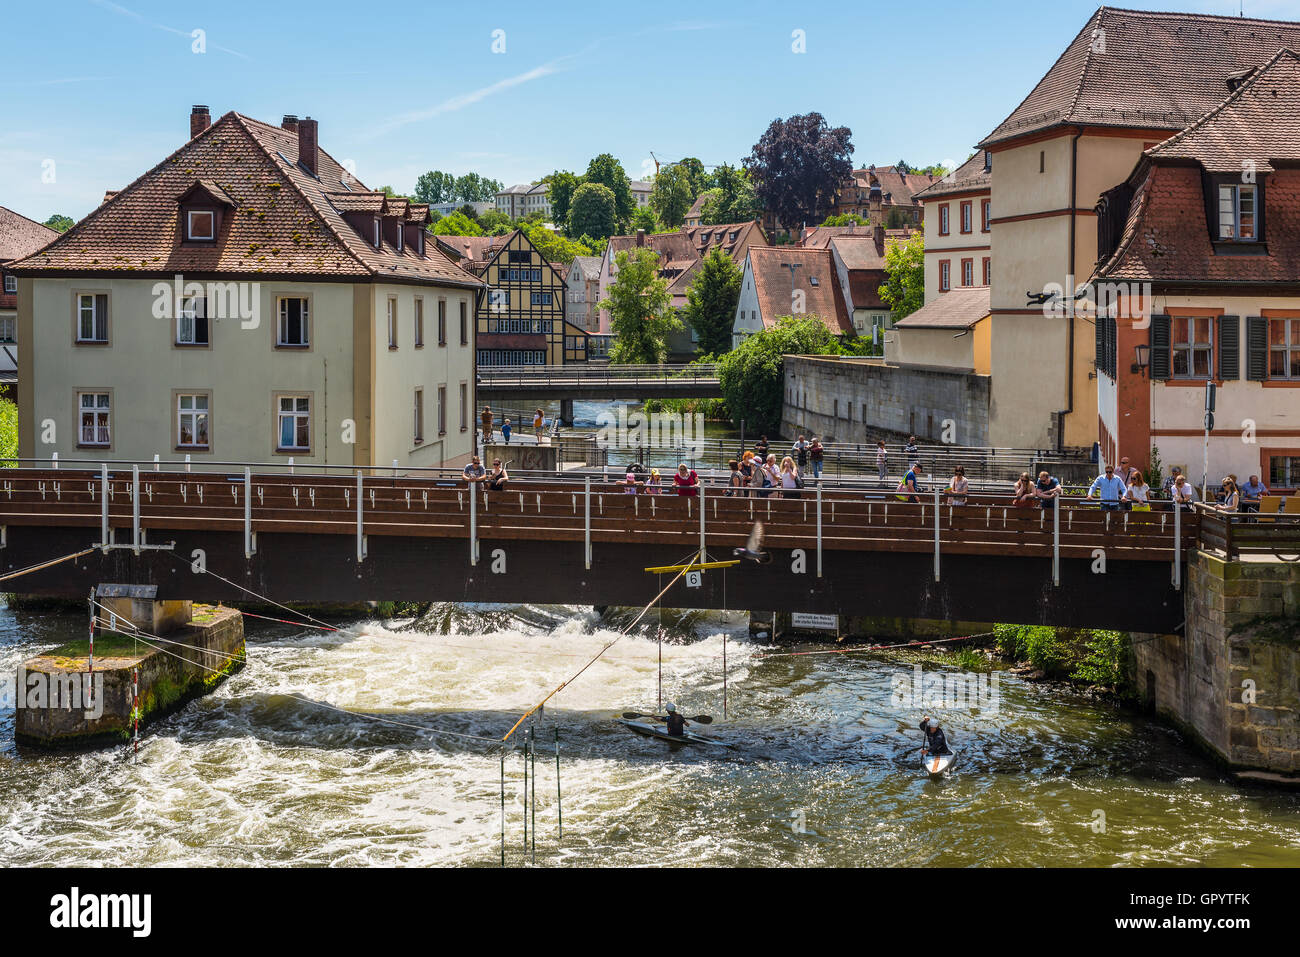 Tourists on a bridge and canoe slalom on the River Regnitz, Bamberg, Bavaria, Germany, Europe. Stock Photo